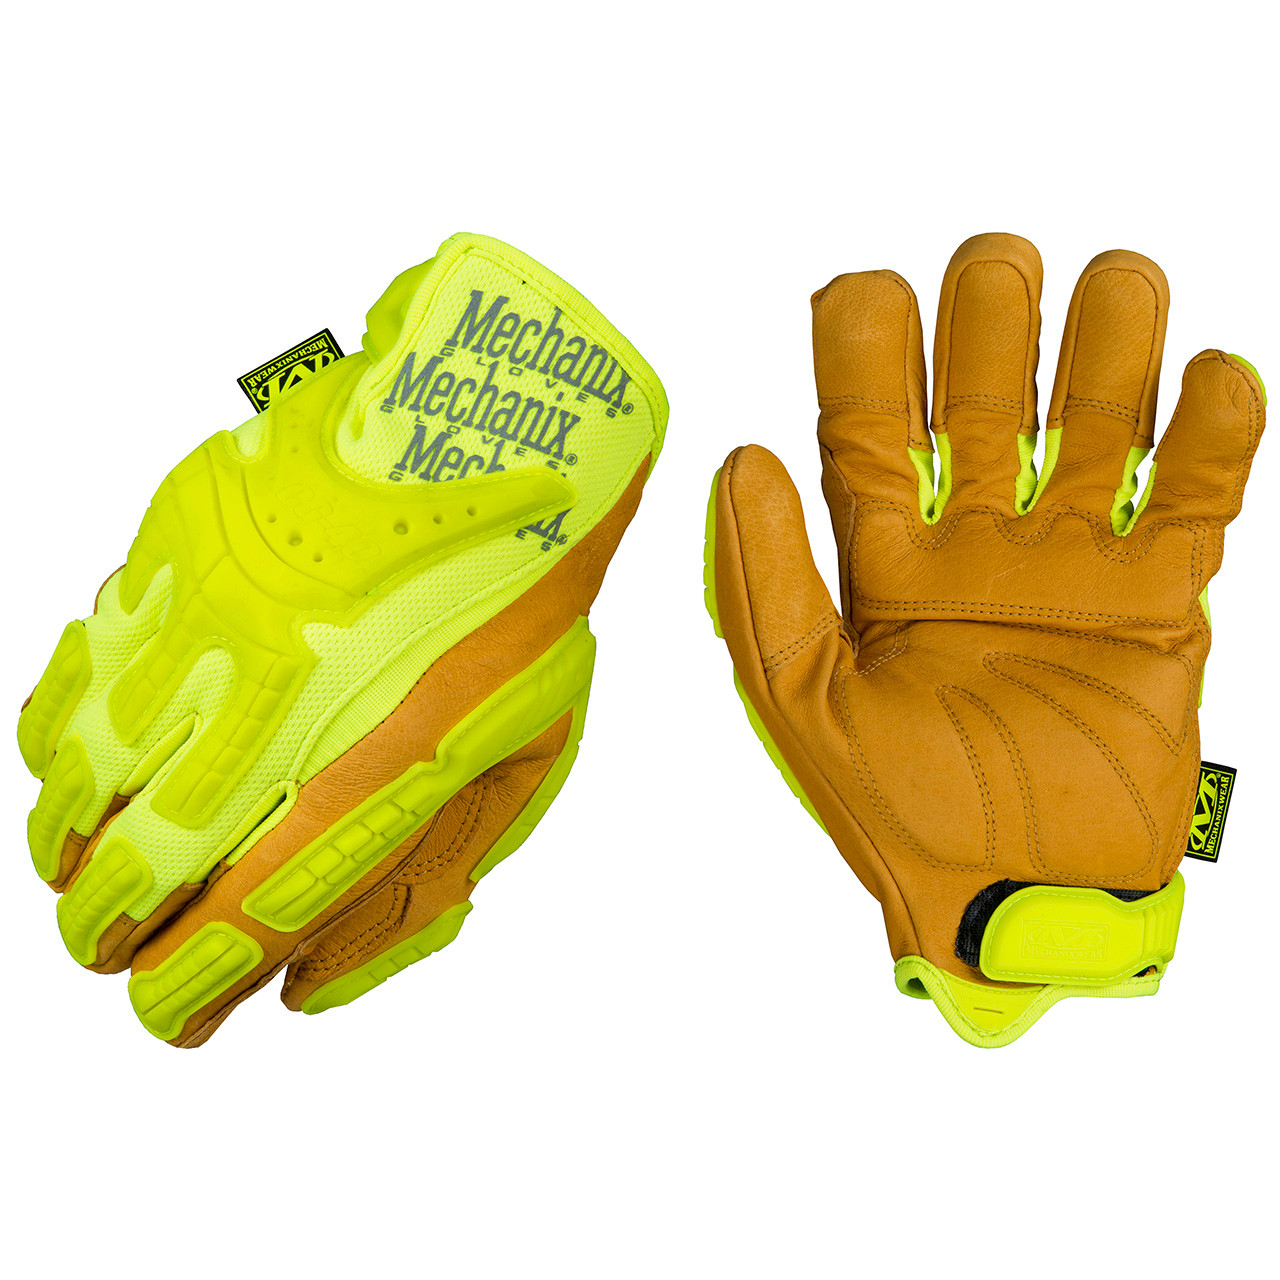 https://cdn11.bigcommerce.com/s-4s9liwcv/images/stencil/1280x1280/products/385642/484937/CG40-91-Mechanix-Wear-Hi-Viz-CG-Heavy-Duty-Leather-Impact-Gloves-pic1__37895.1612558315.jpg?c=2